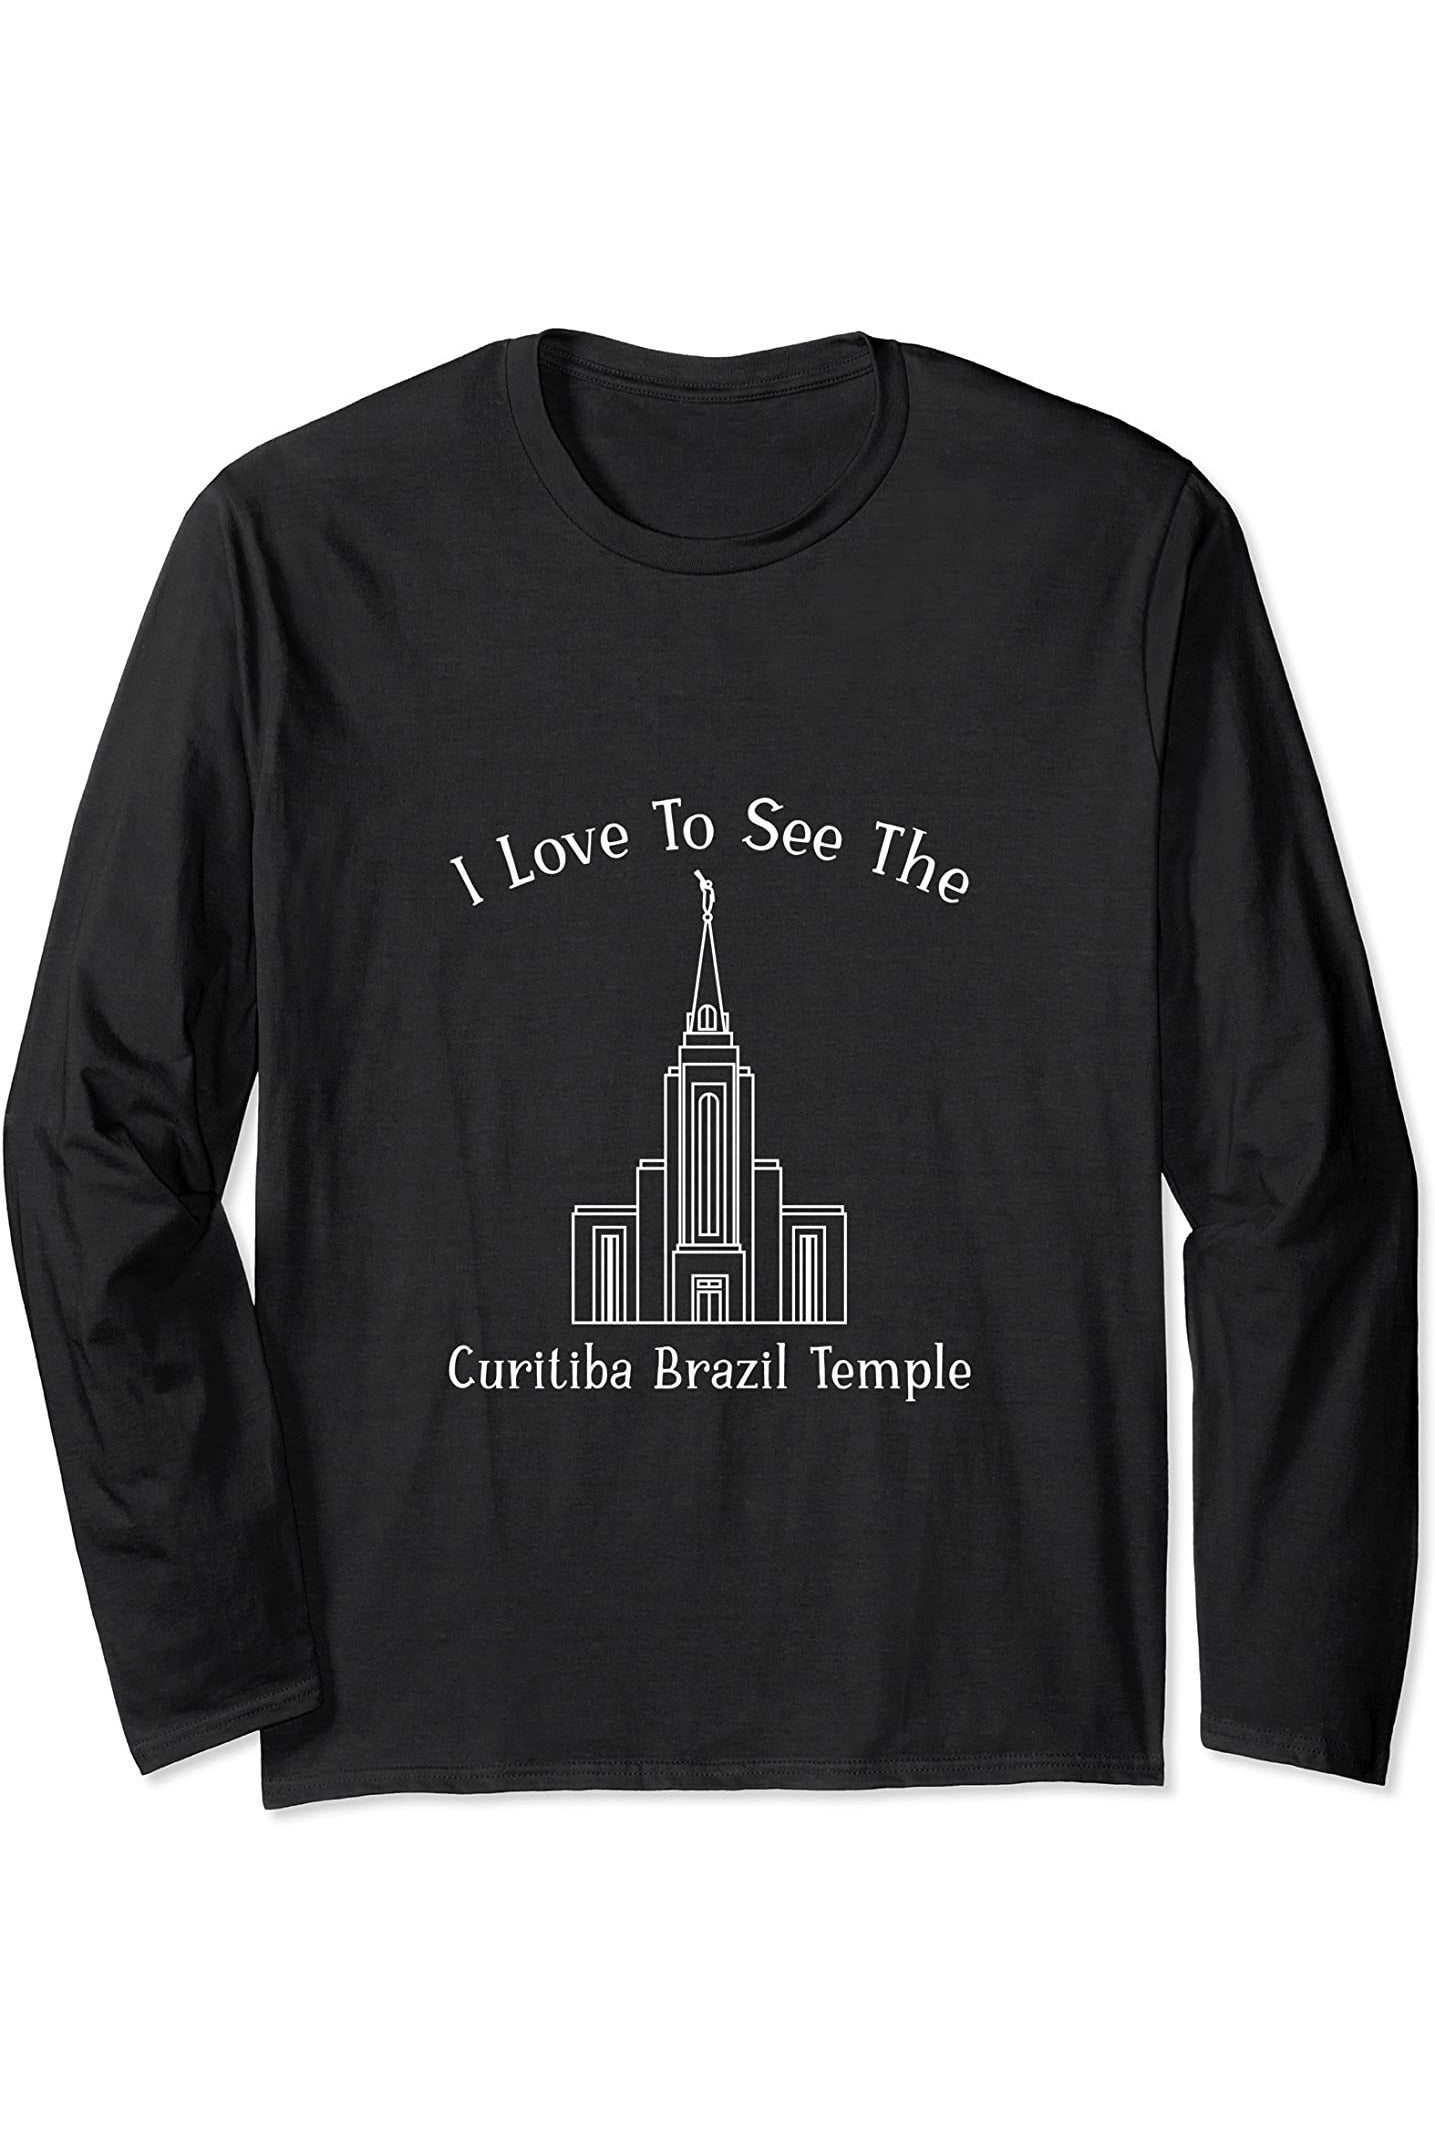 Curitiba Brazil Temple Long Sleeve T-Shirt - Happy Style (English) US